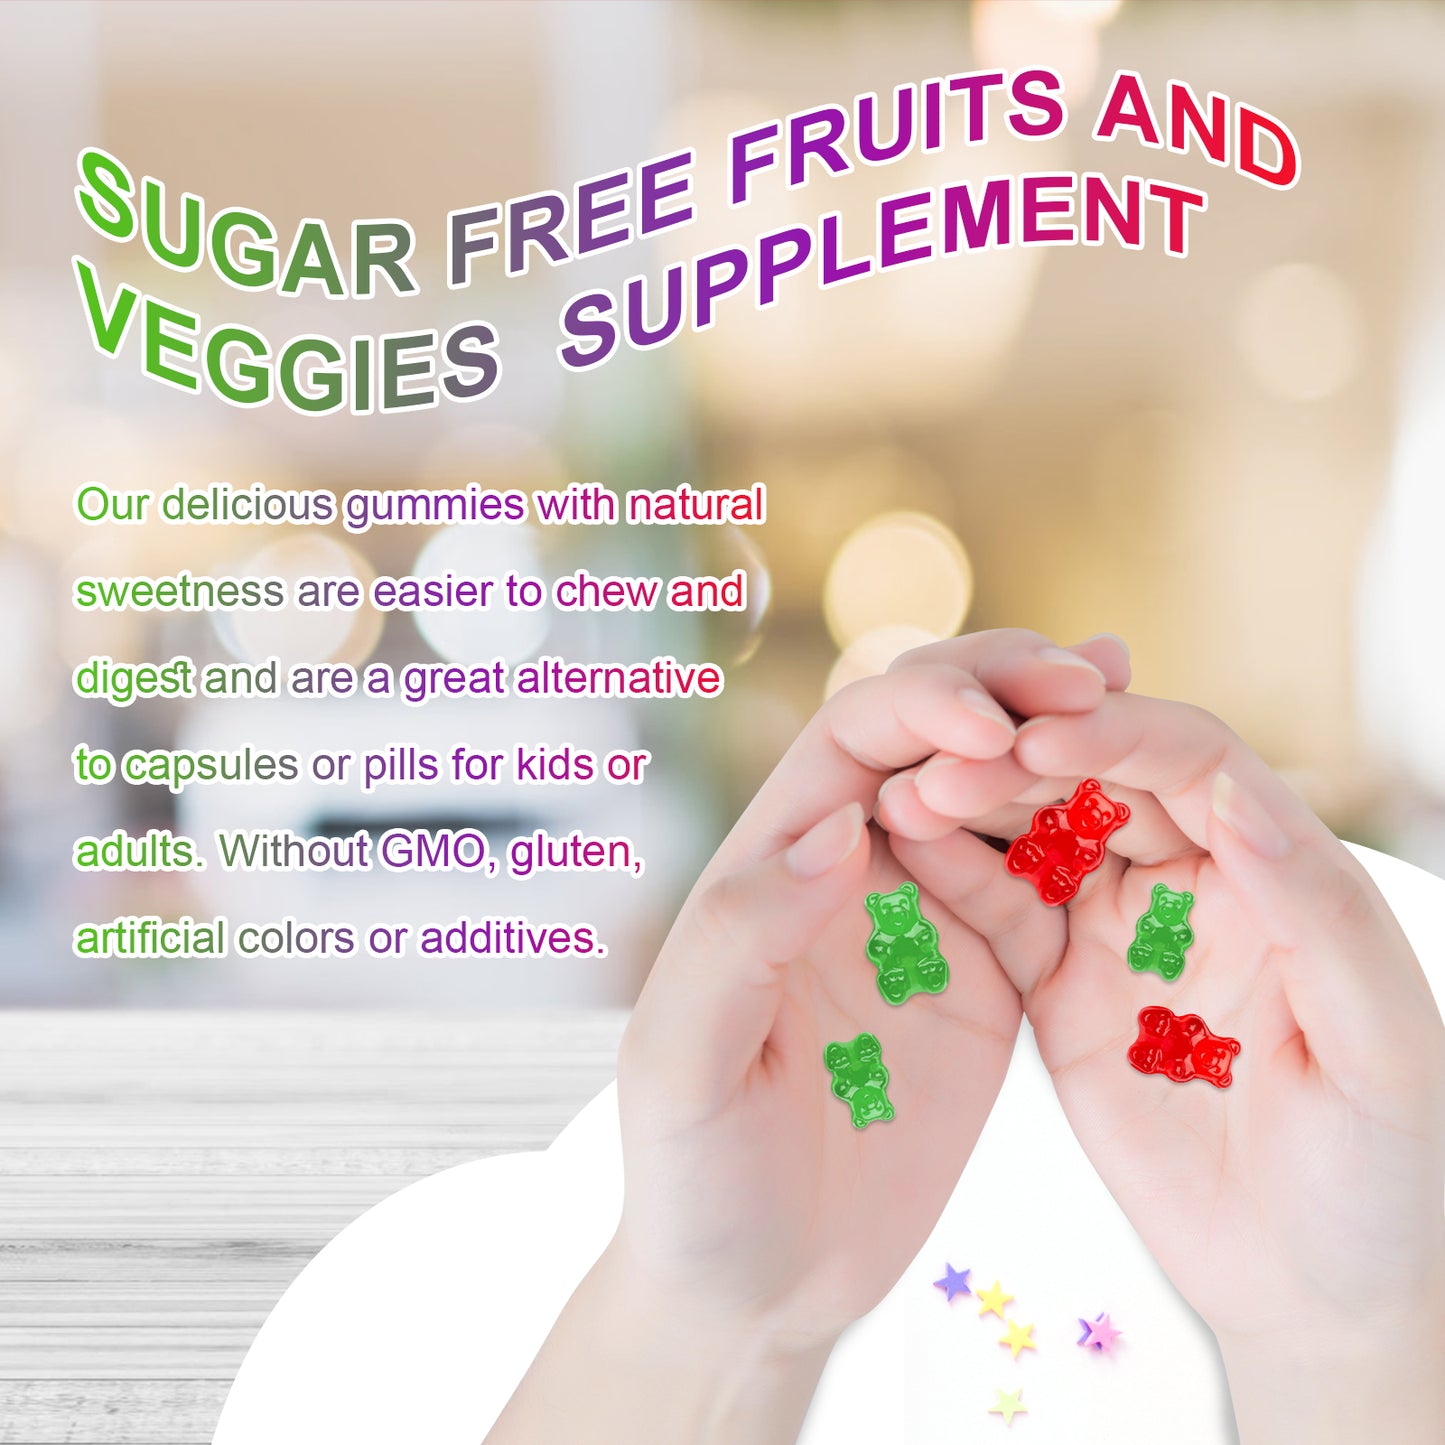 Sugar-Free Fruits and Veggies Organic Gummies Supplement, Multi-Vitamins & Minerals in Gummies, Natural Fruits and Vegetables Supplement, Immunity & Antioxidant & Energy Supplements for Women & Men